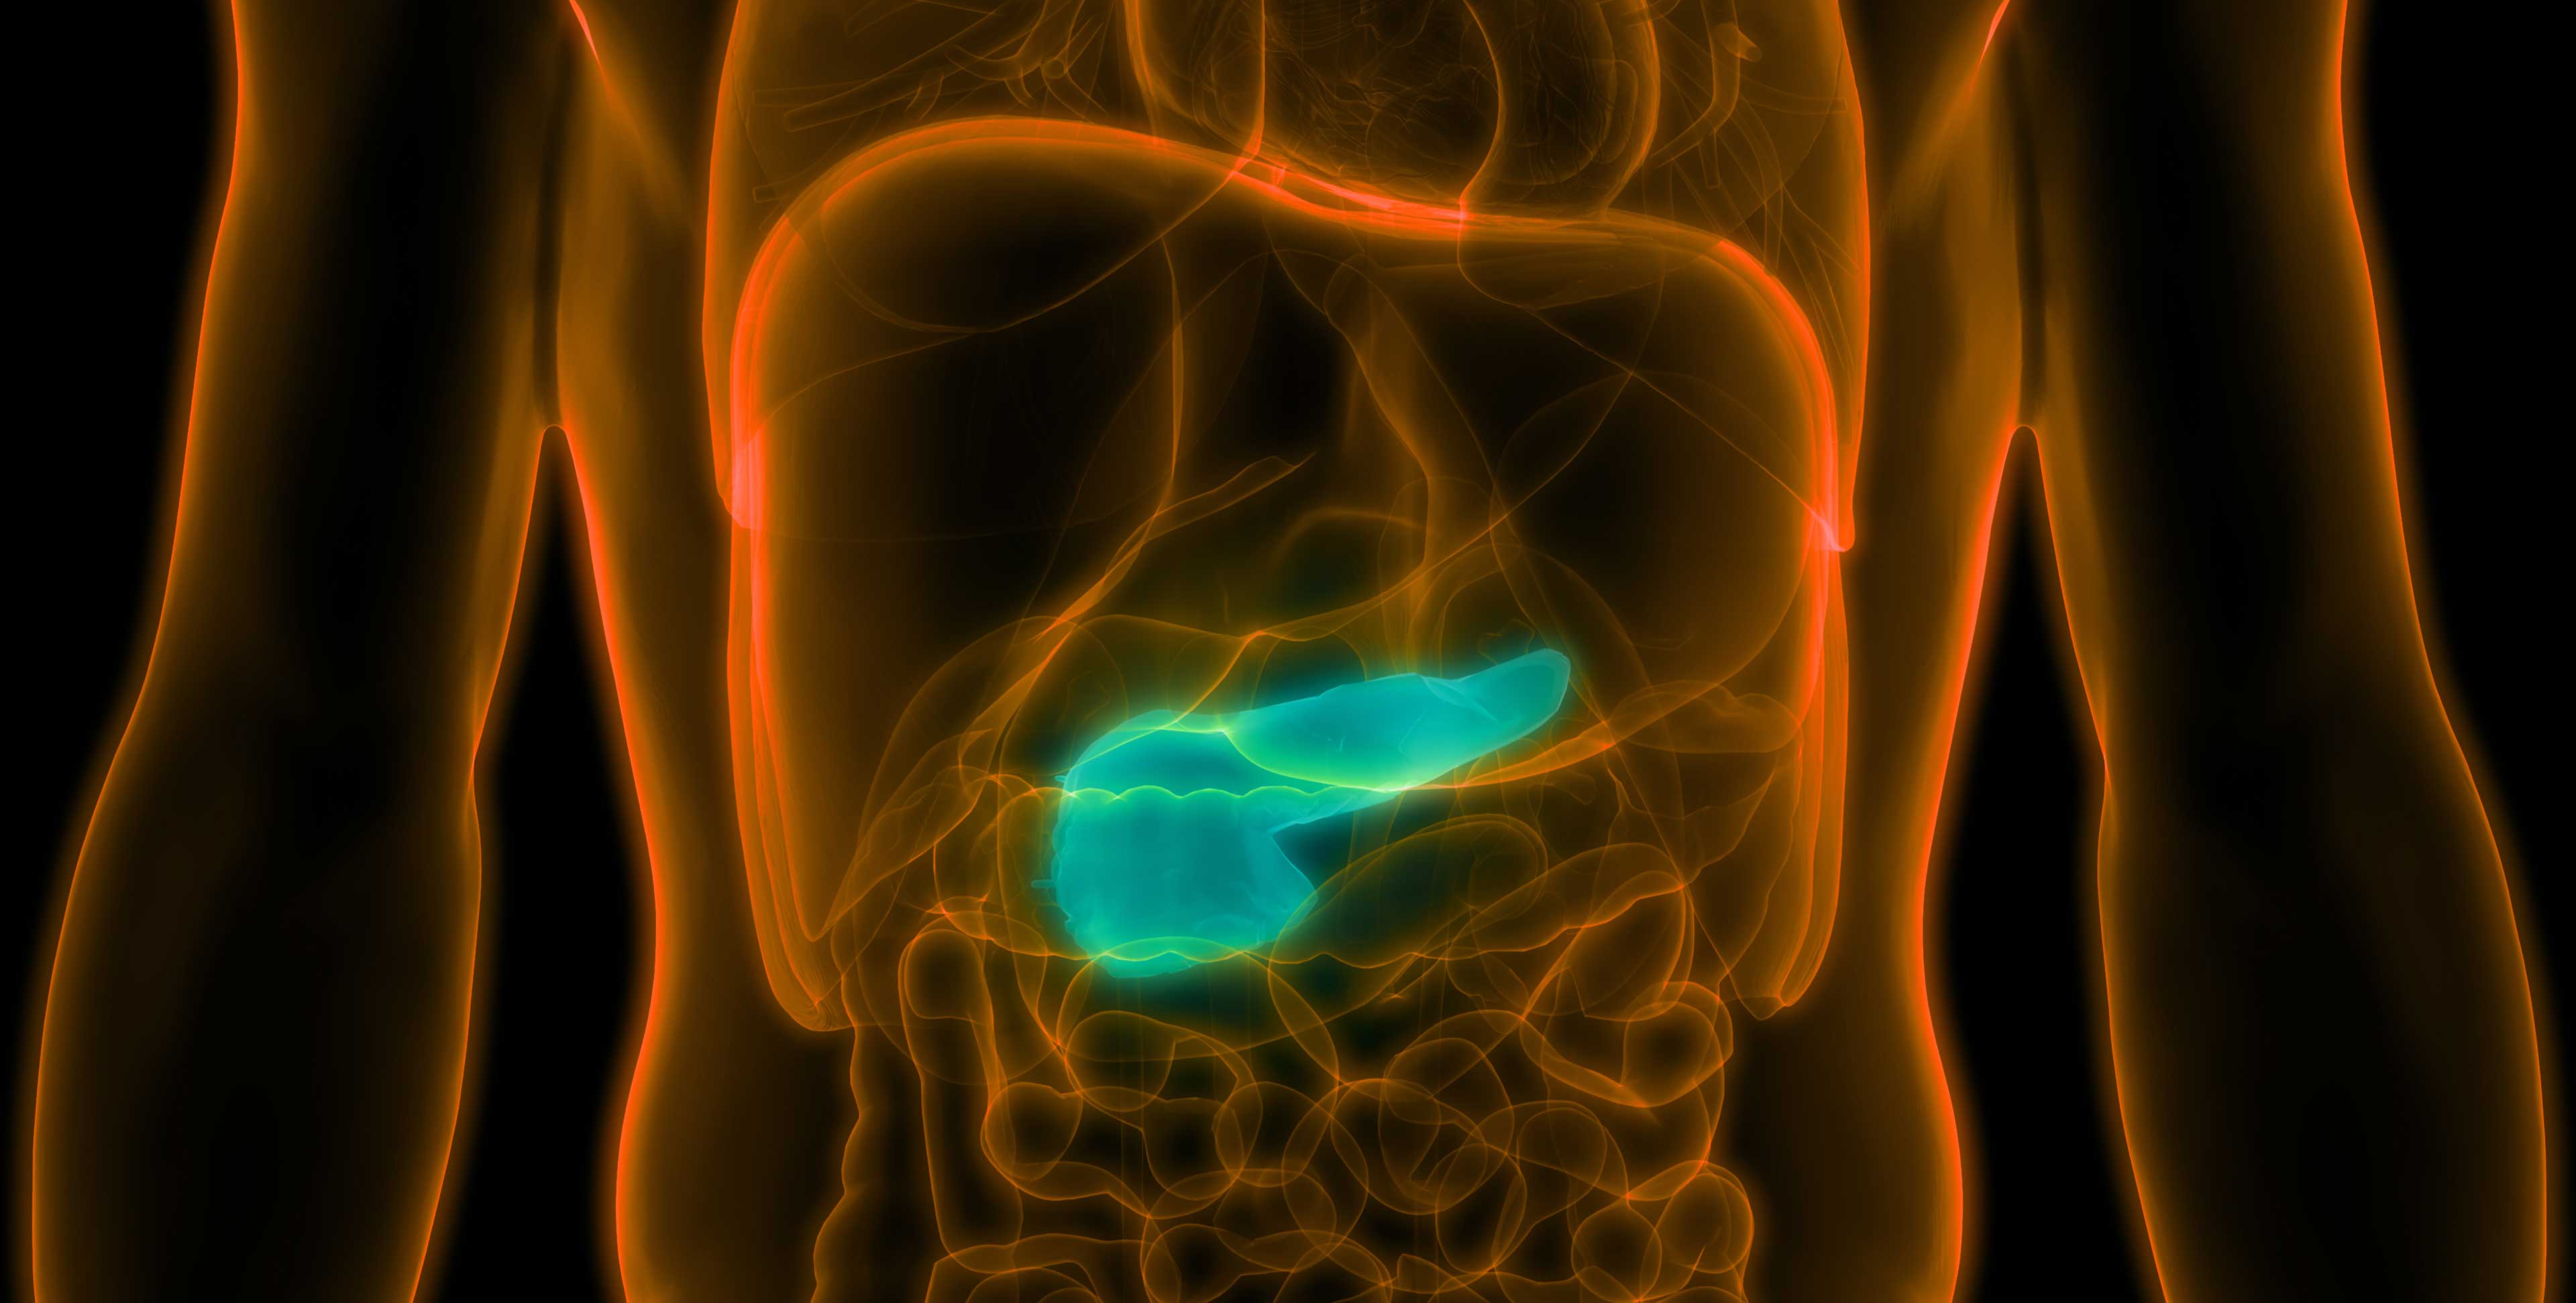 Artist's depiction of a pancreas inside a body 